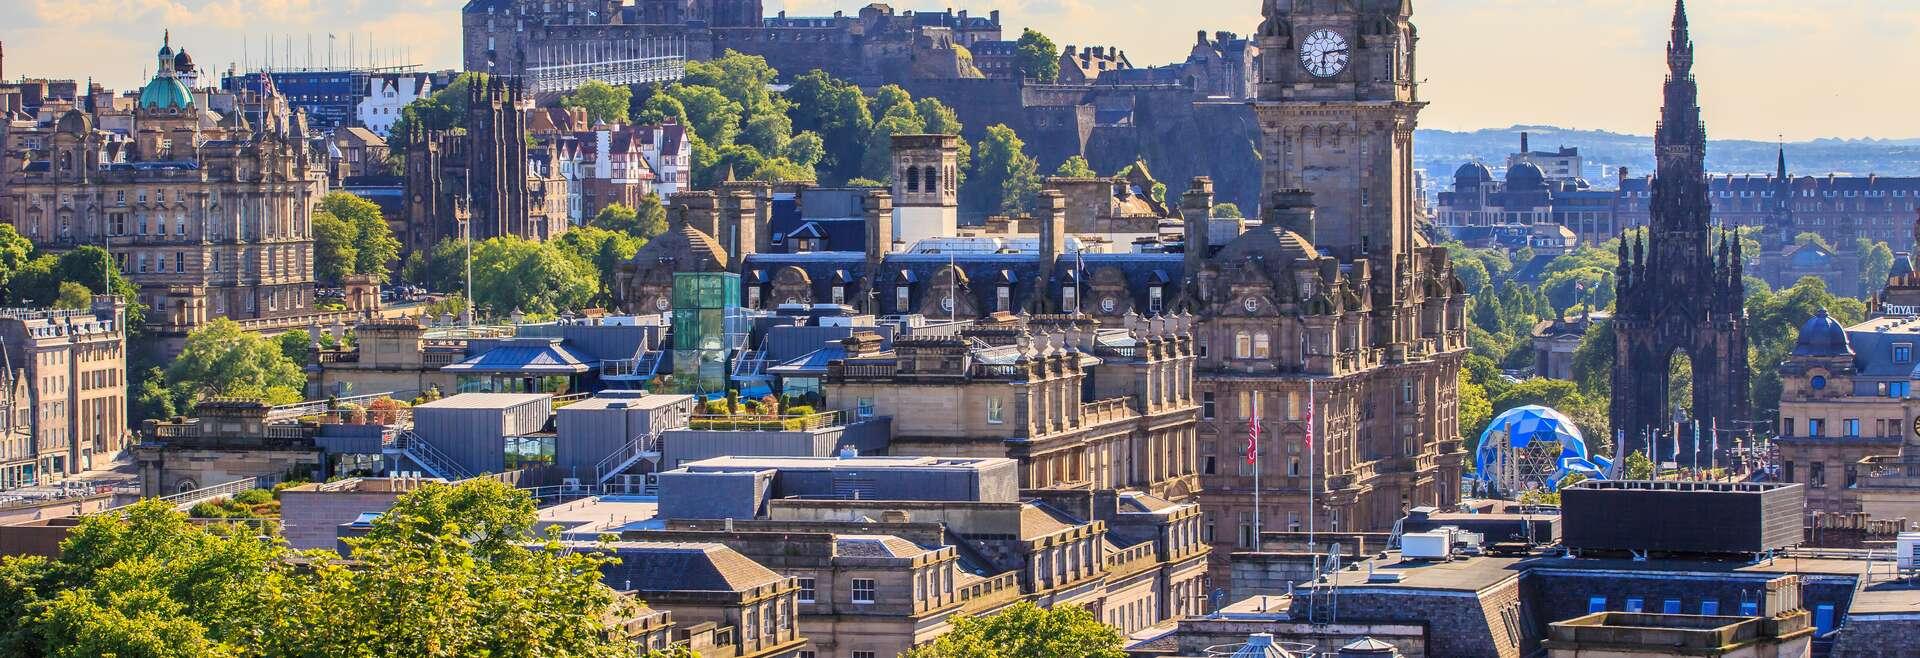 Séjour linguistique Angleterre, Edinburgh, Castle Rock